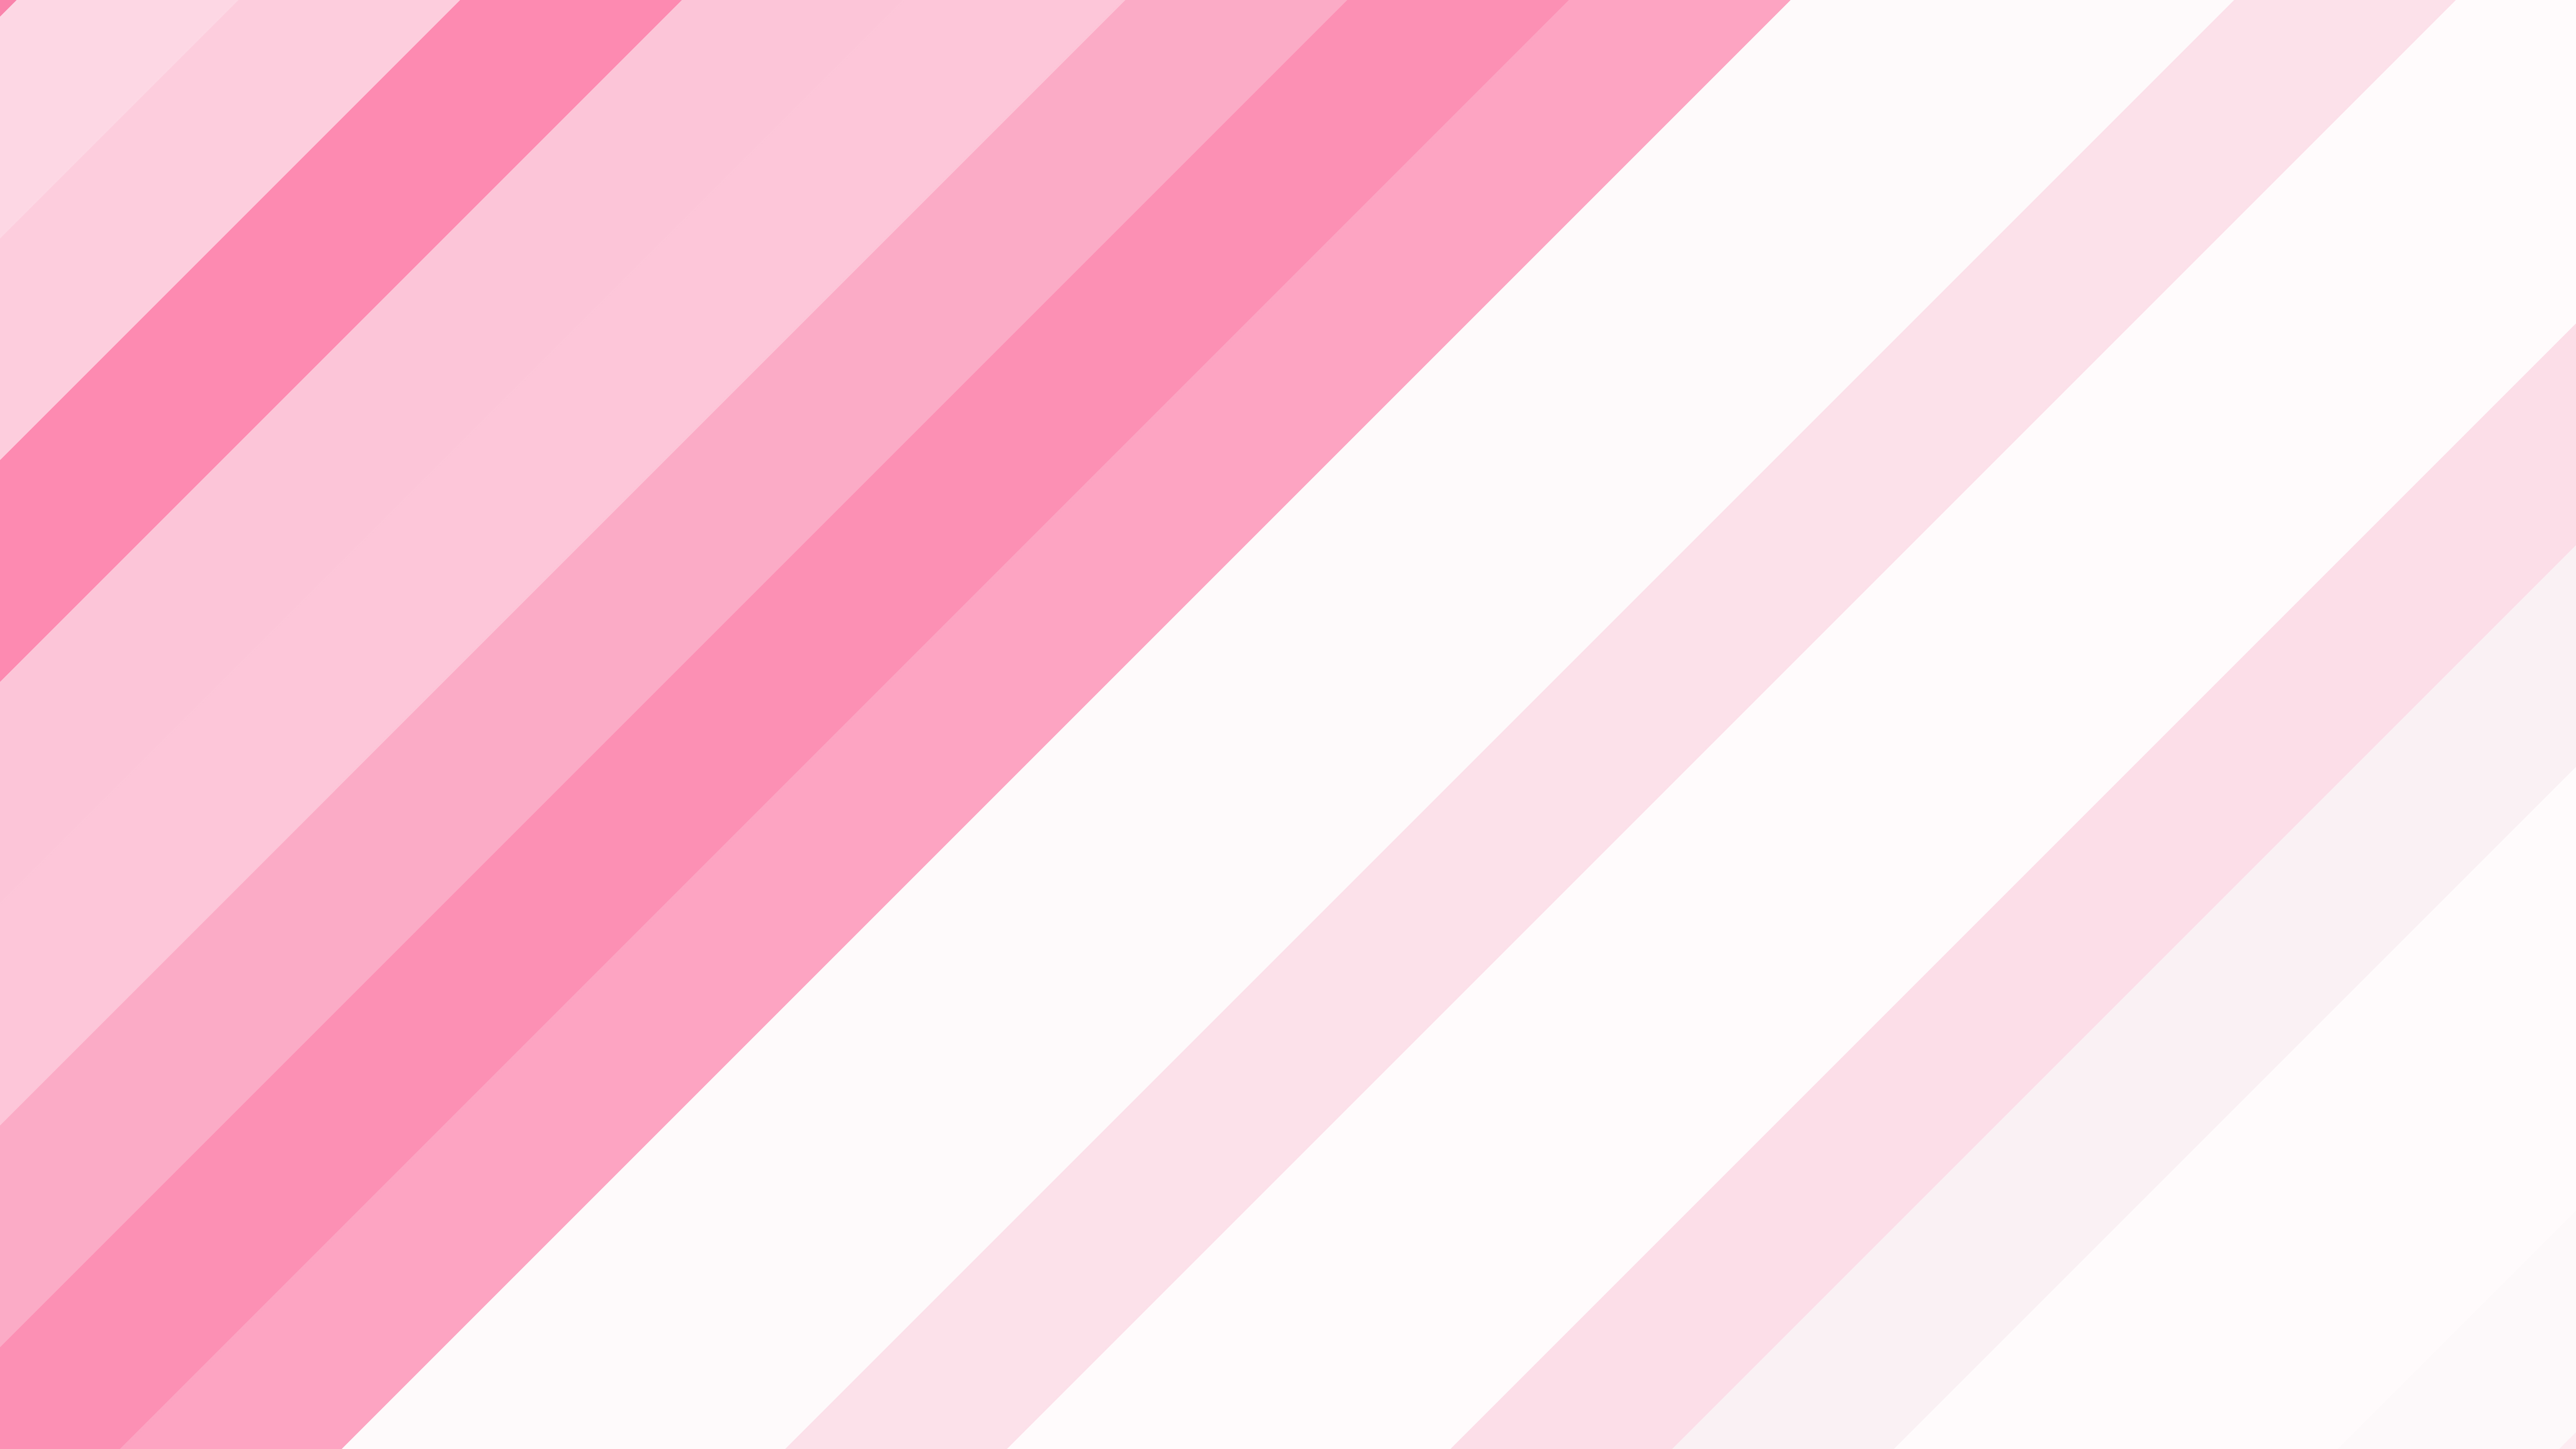 Pink And White Stripes - Pink And White Stripes Background Royalty Free ...